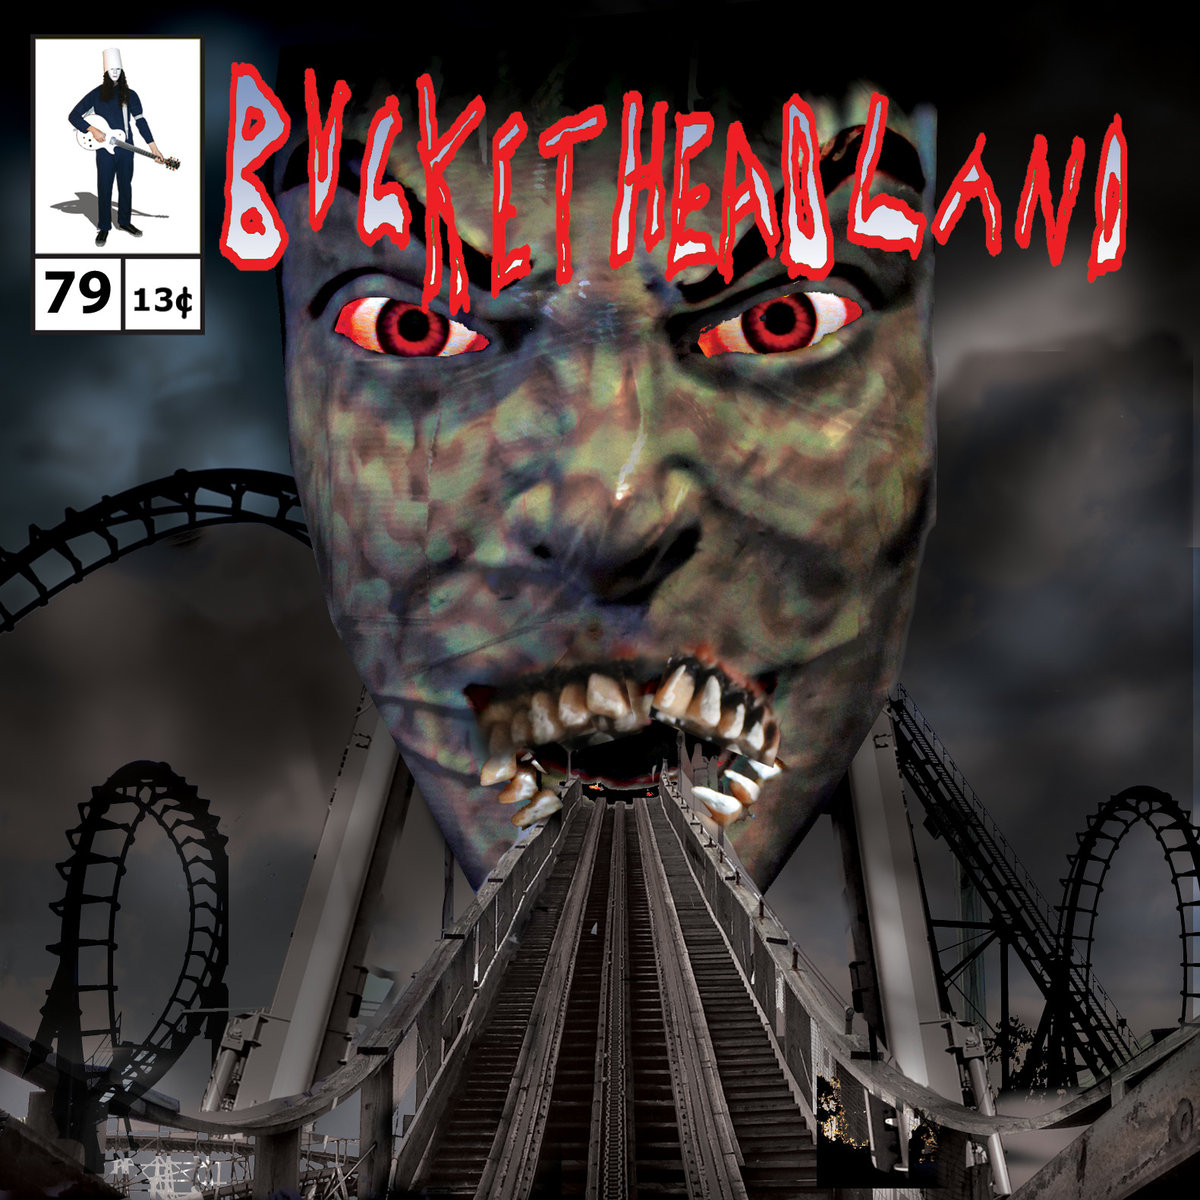 Buckethead - Pike 79: Geppetos Trunk (2014)